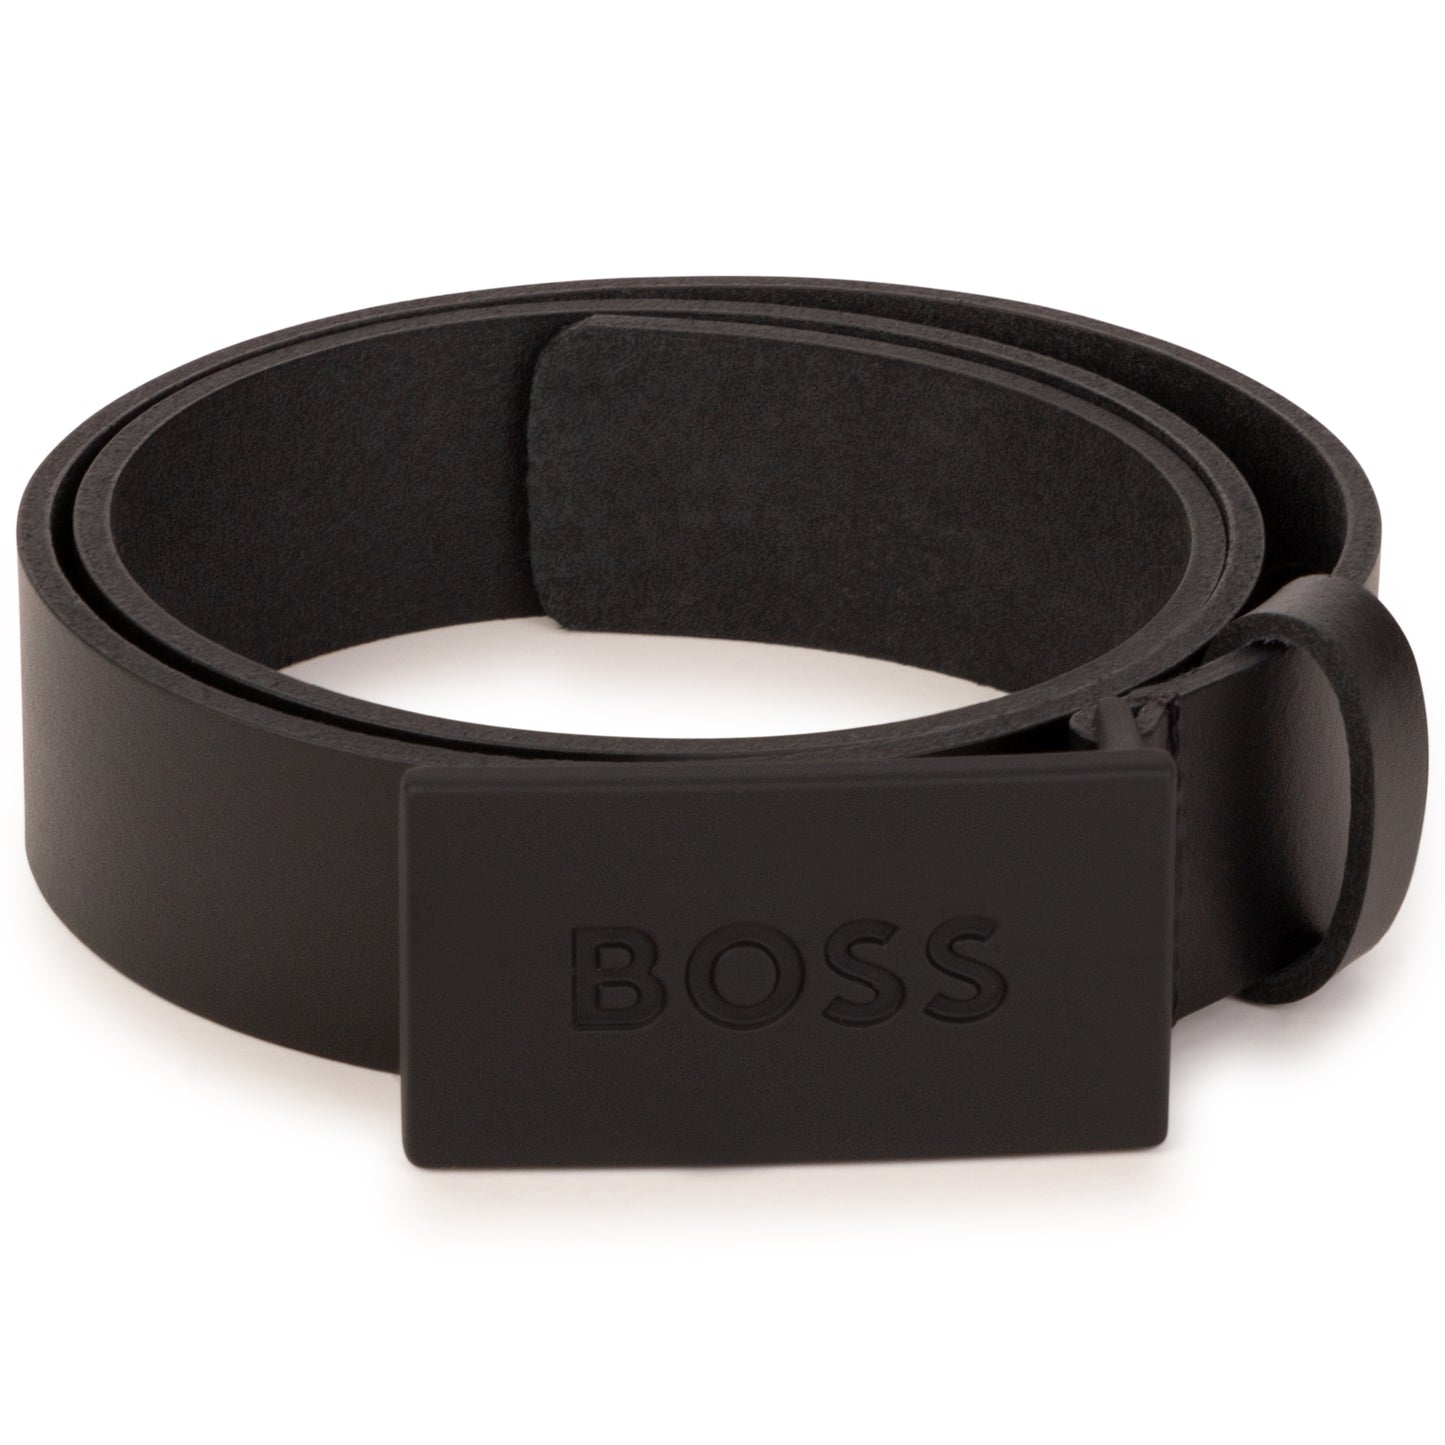 Hugo Boss Boys Leather Belt_ Black J20332-09B